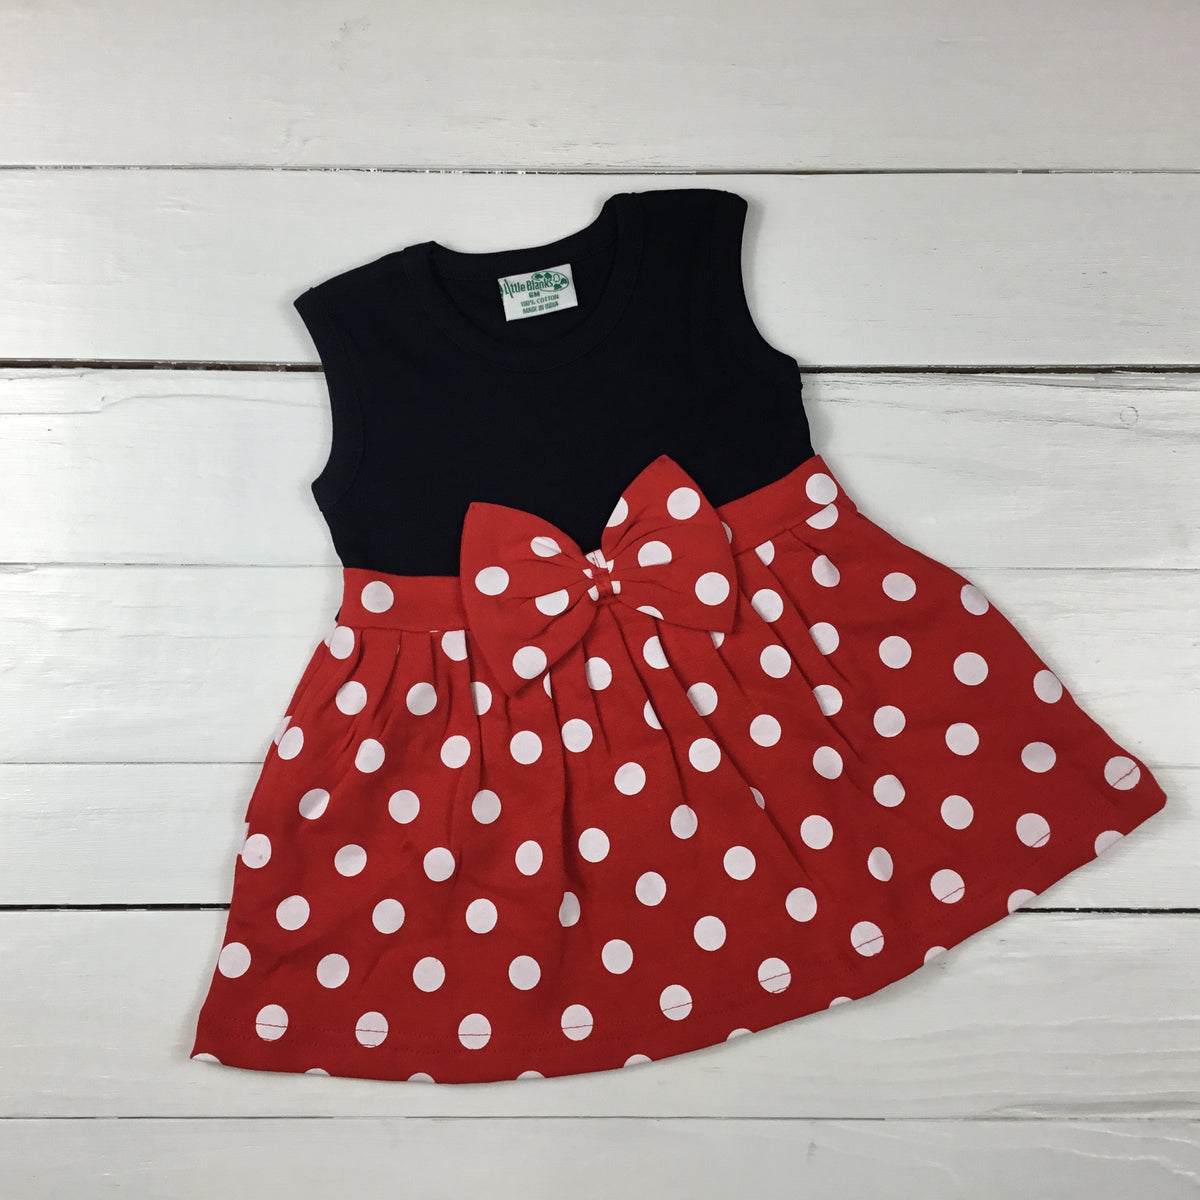 Girls Minnie Mouse Inspired Dress - Little Blanks, LLC